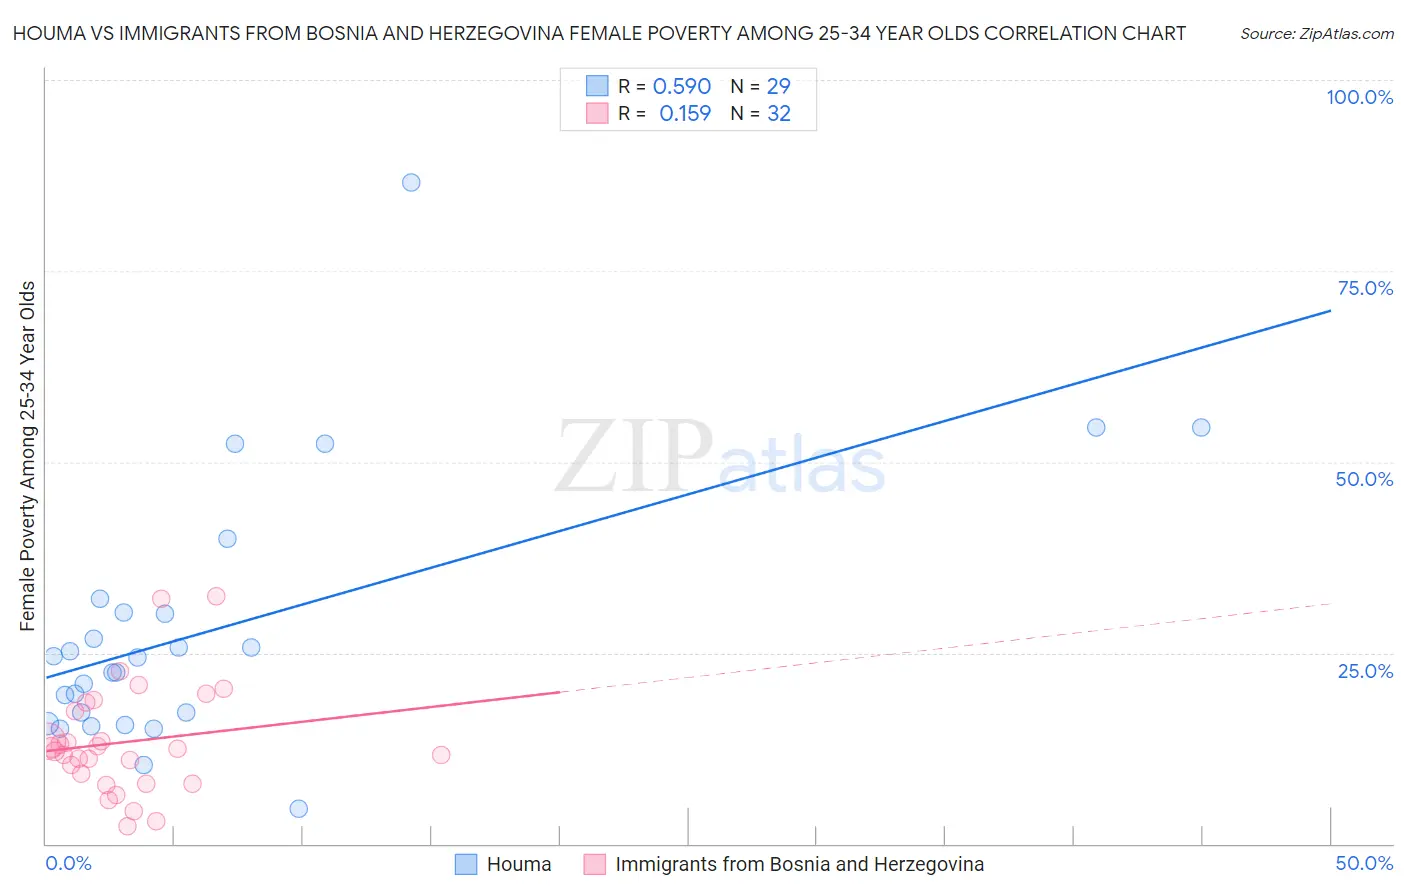 Houma vs Immigrants from Bosnia and Herzegovina Female Poverty Among 25-34 Year Olds